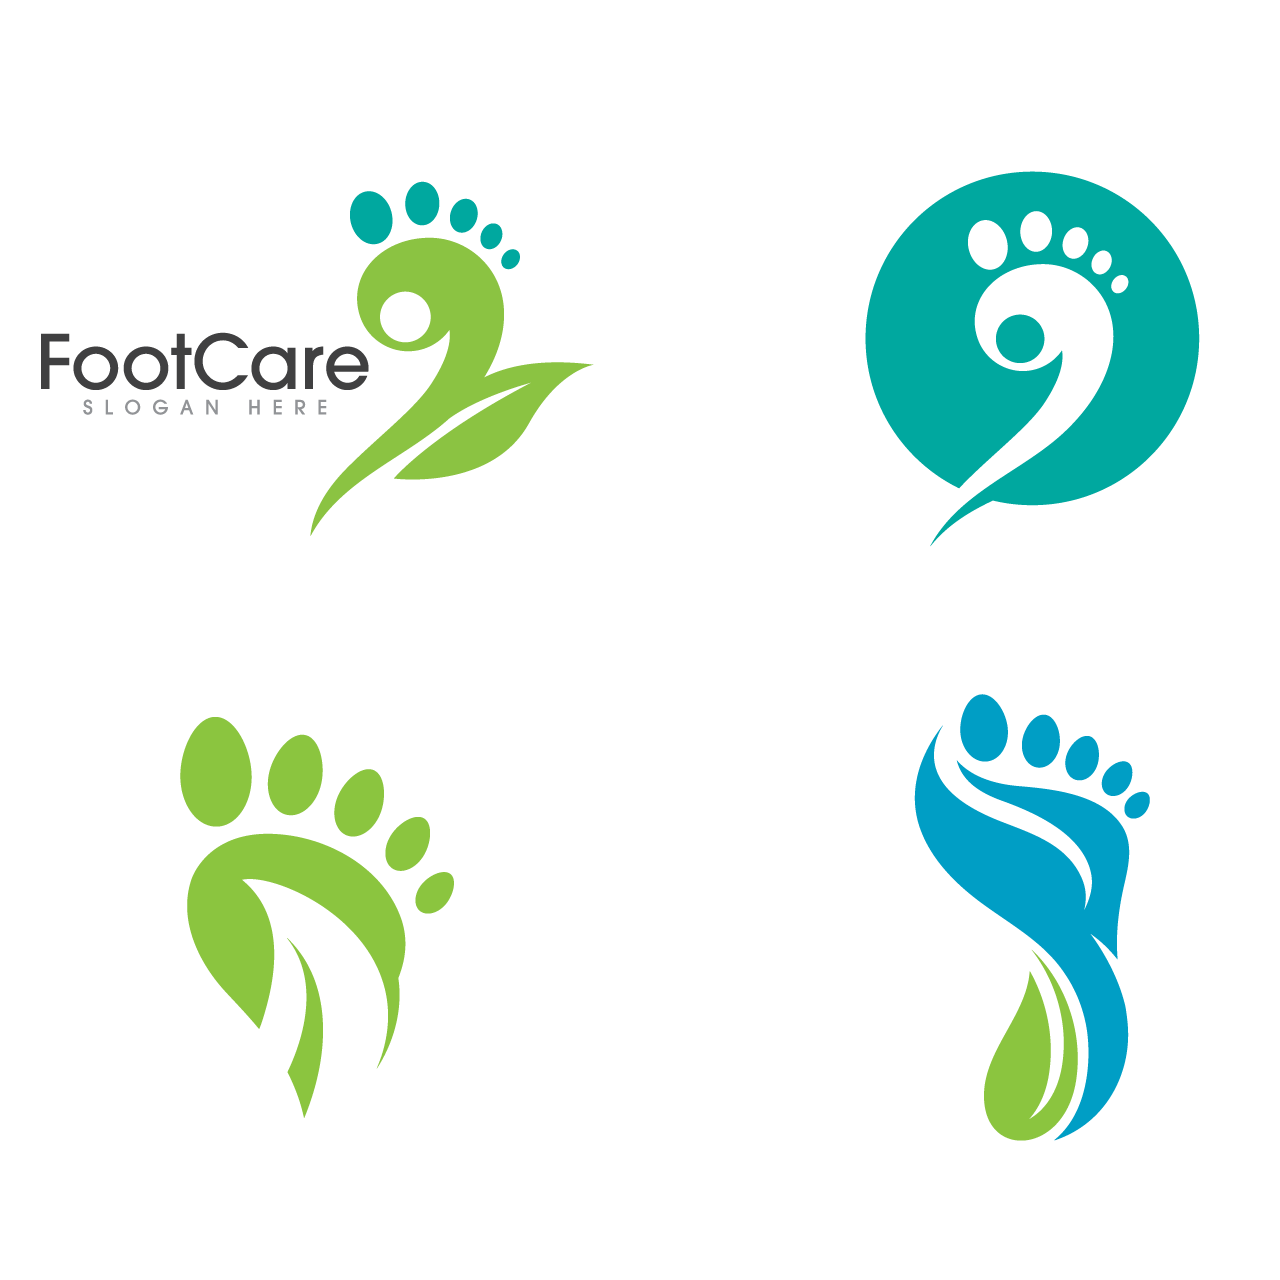 Foot care logo template cartoon illustration image hand drawing sketch